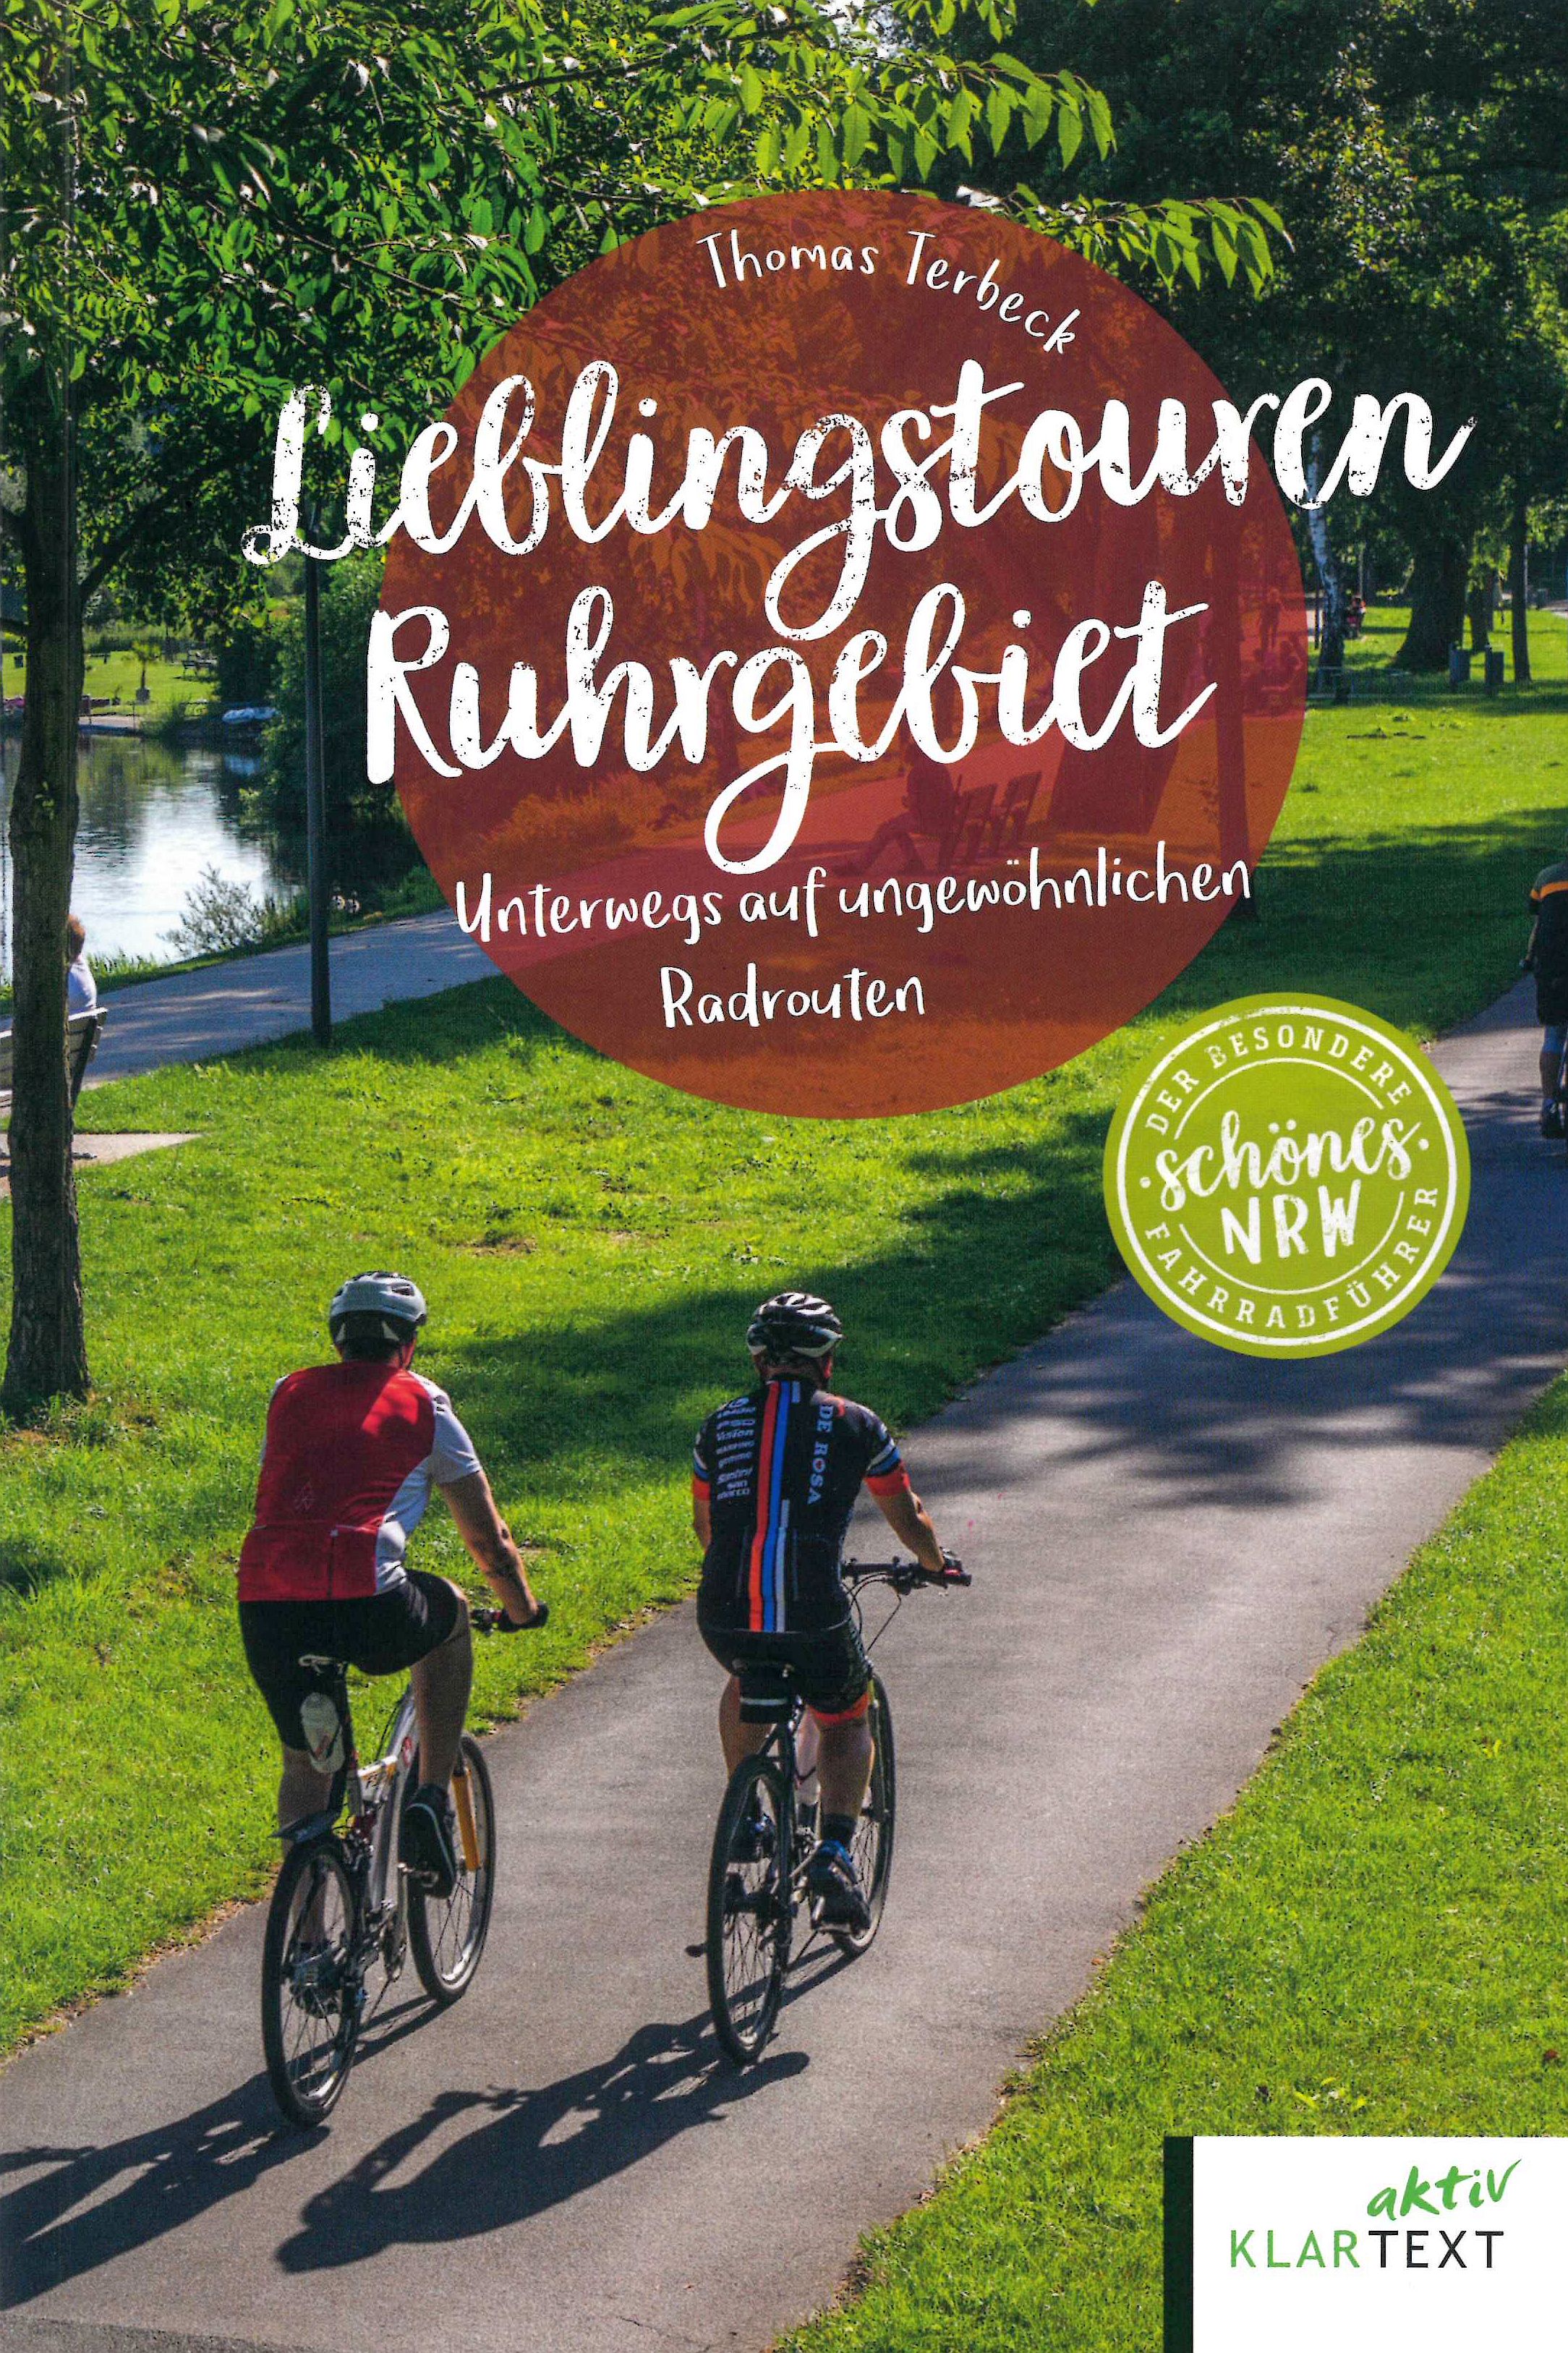 Reiseführer "Lieblingstouren Ruhrgebiet"